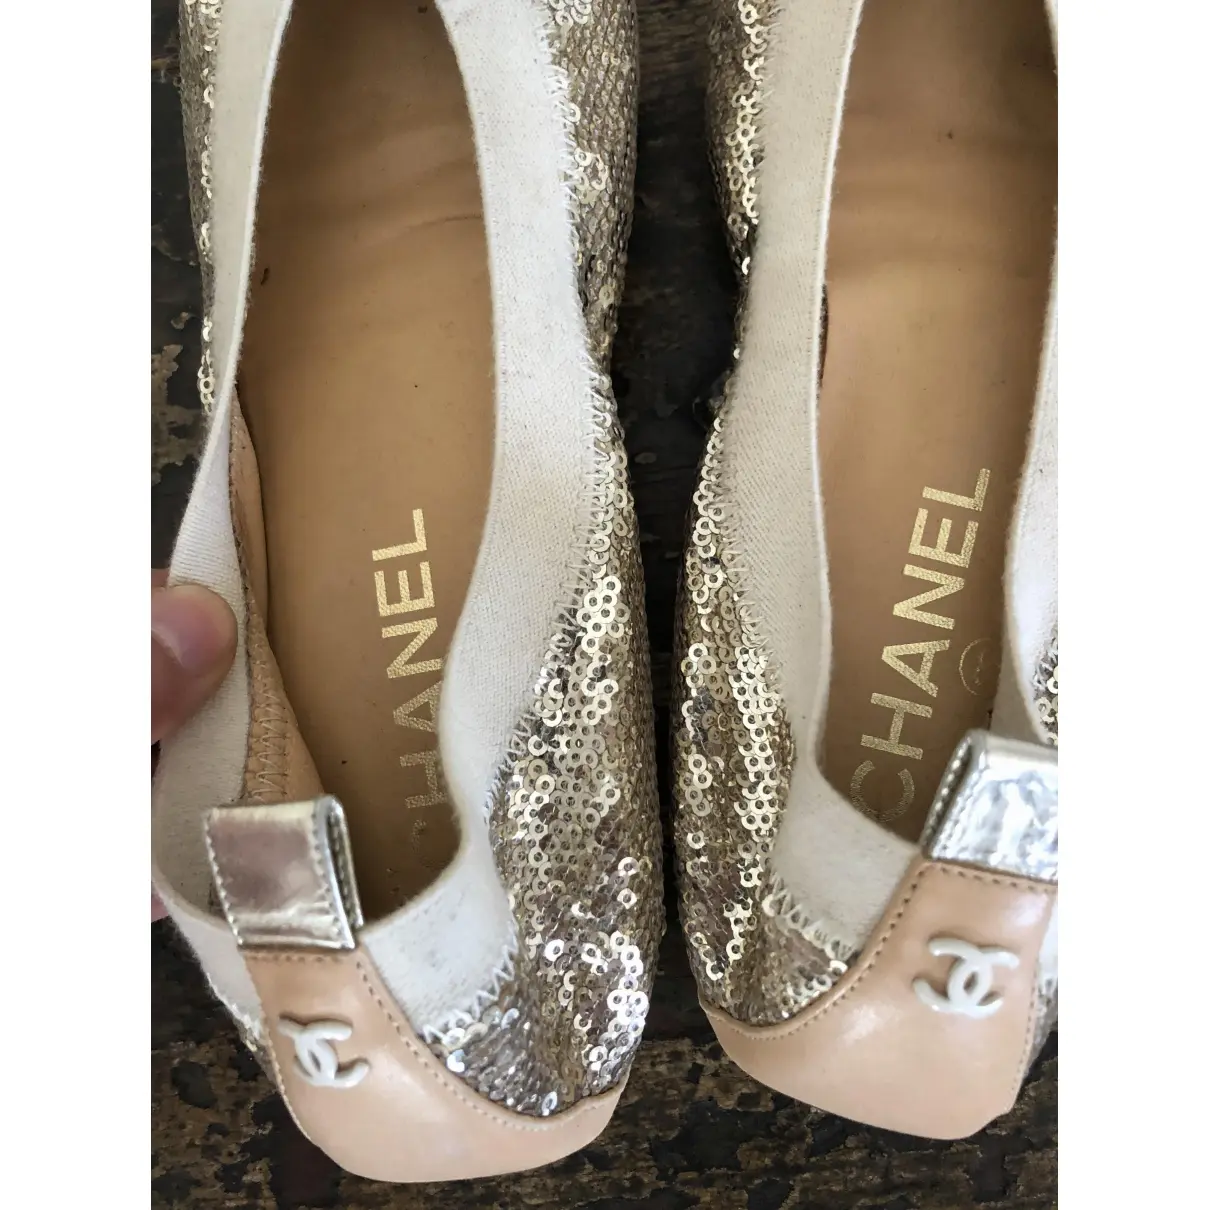 Buy Chanel Glitter ballet flats online